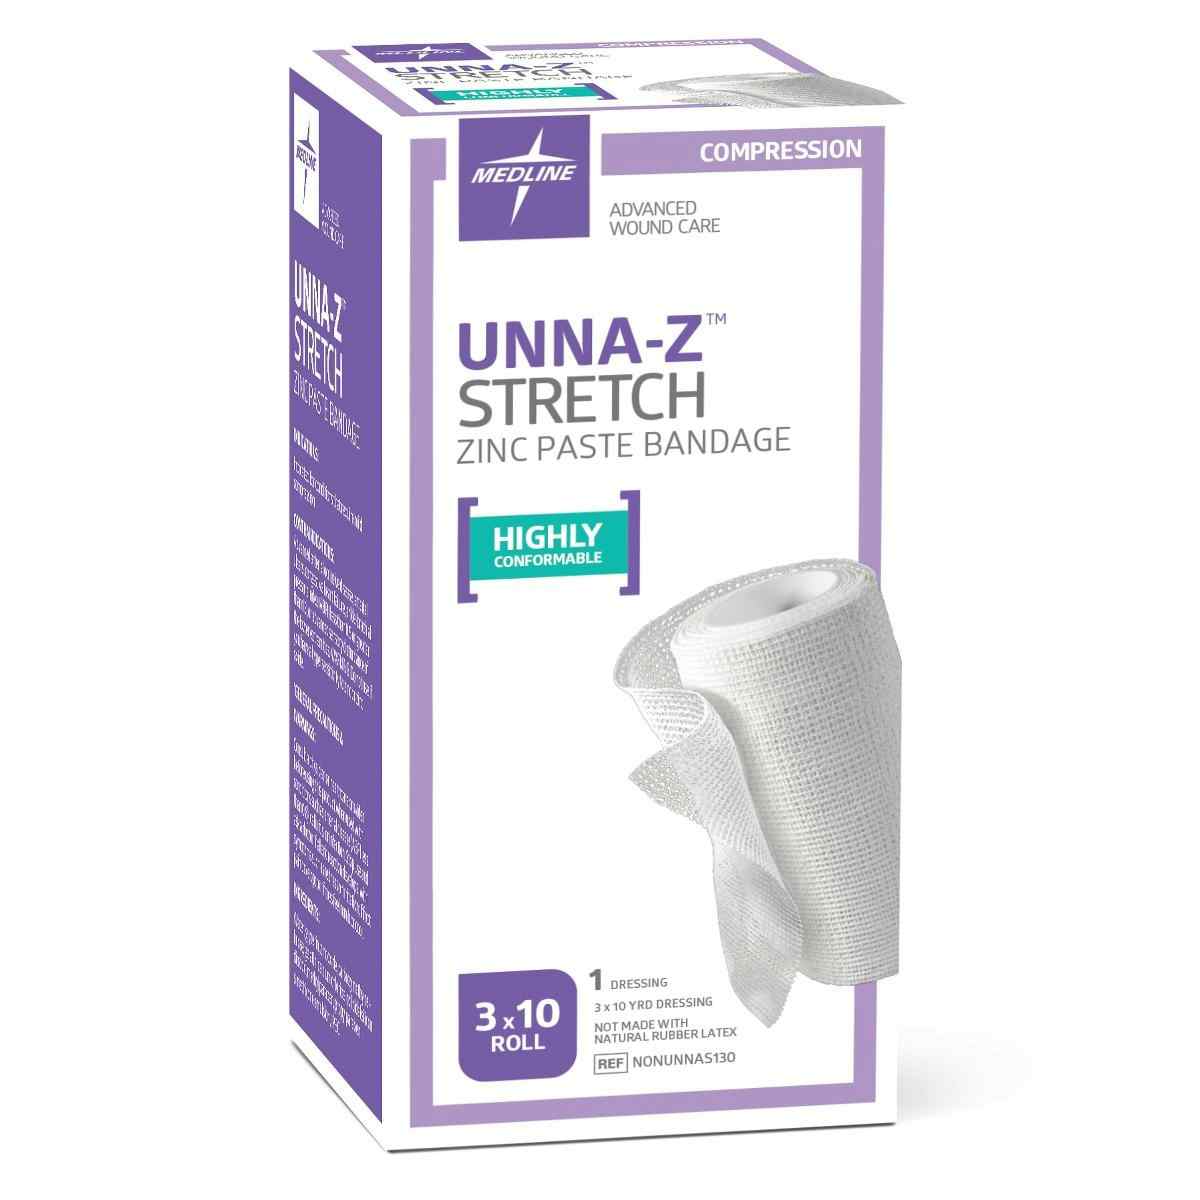 Medline Unna-Z Stretch Zinc Paste Bandage